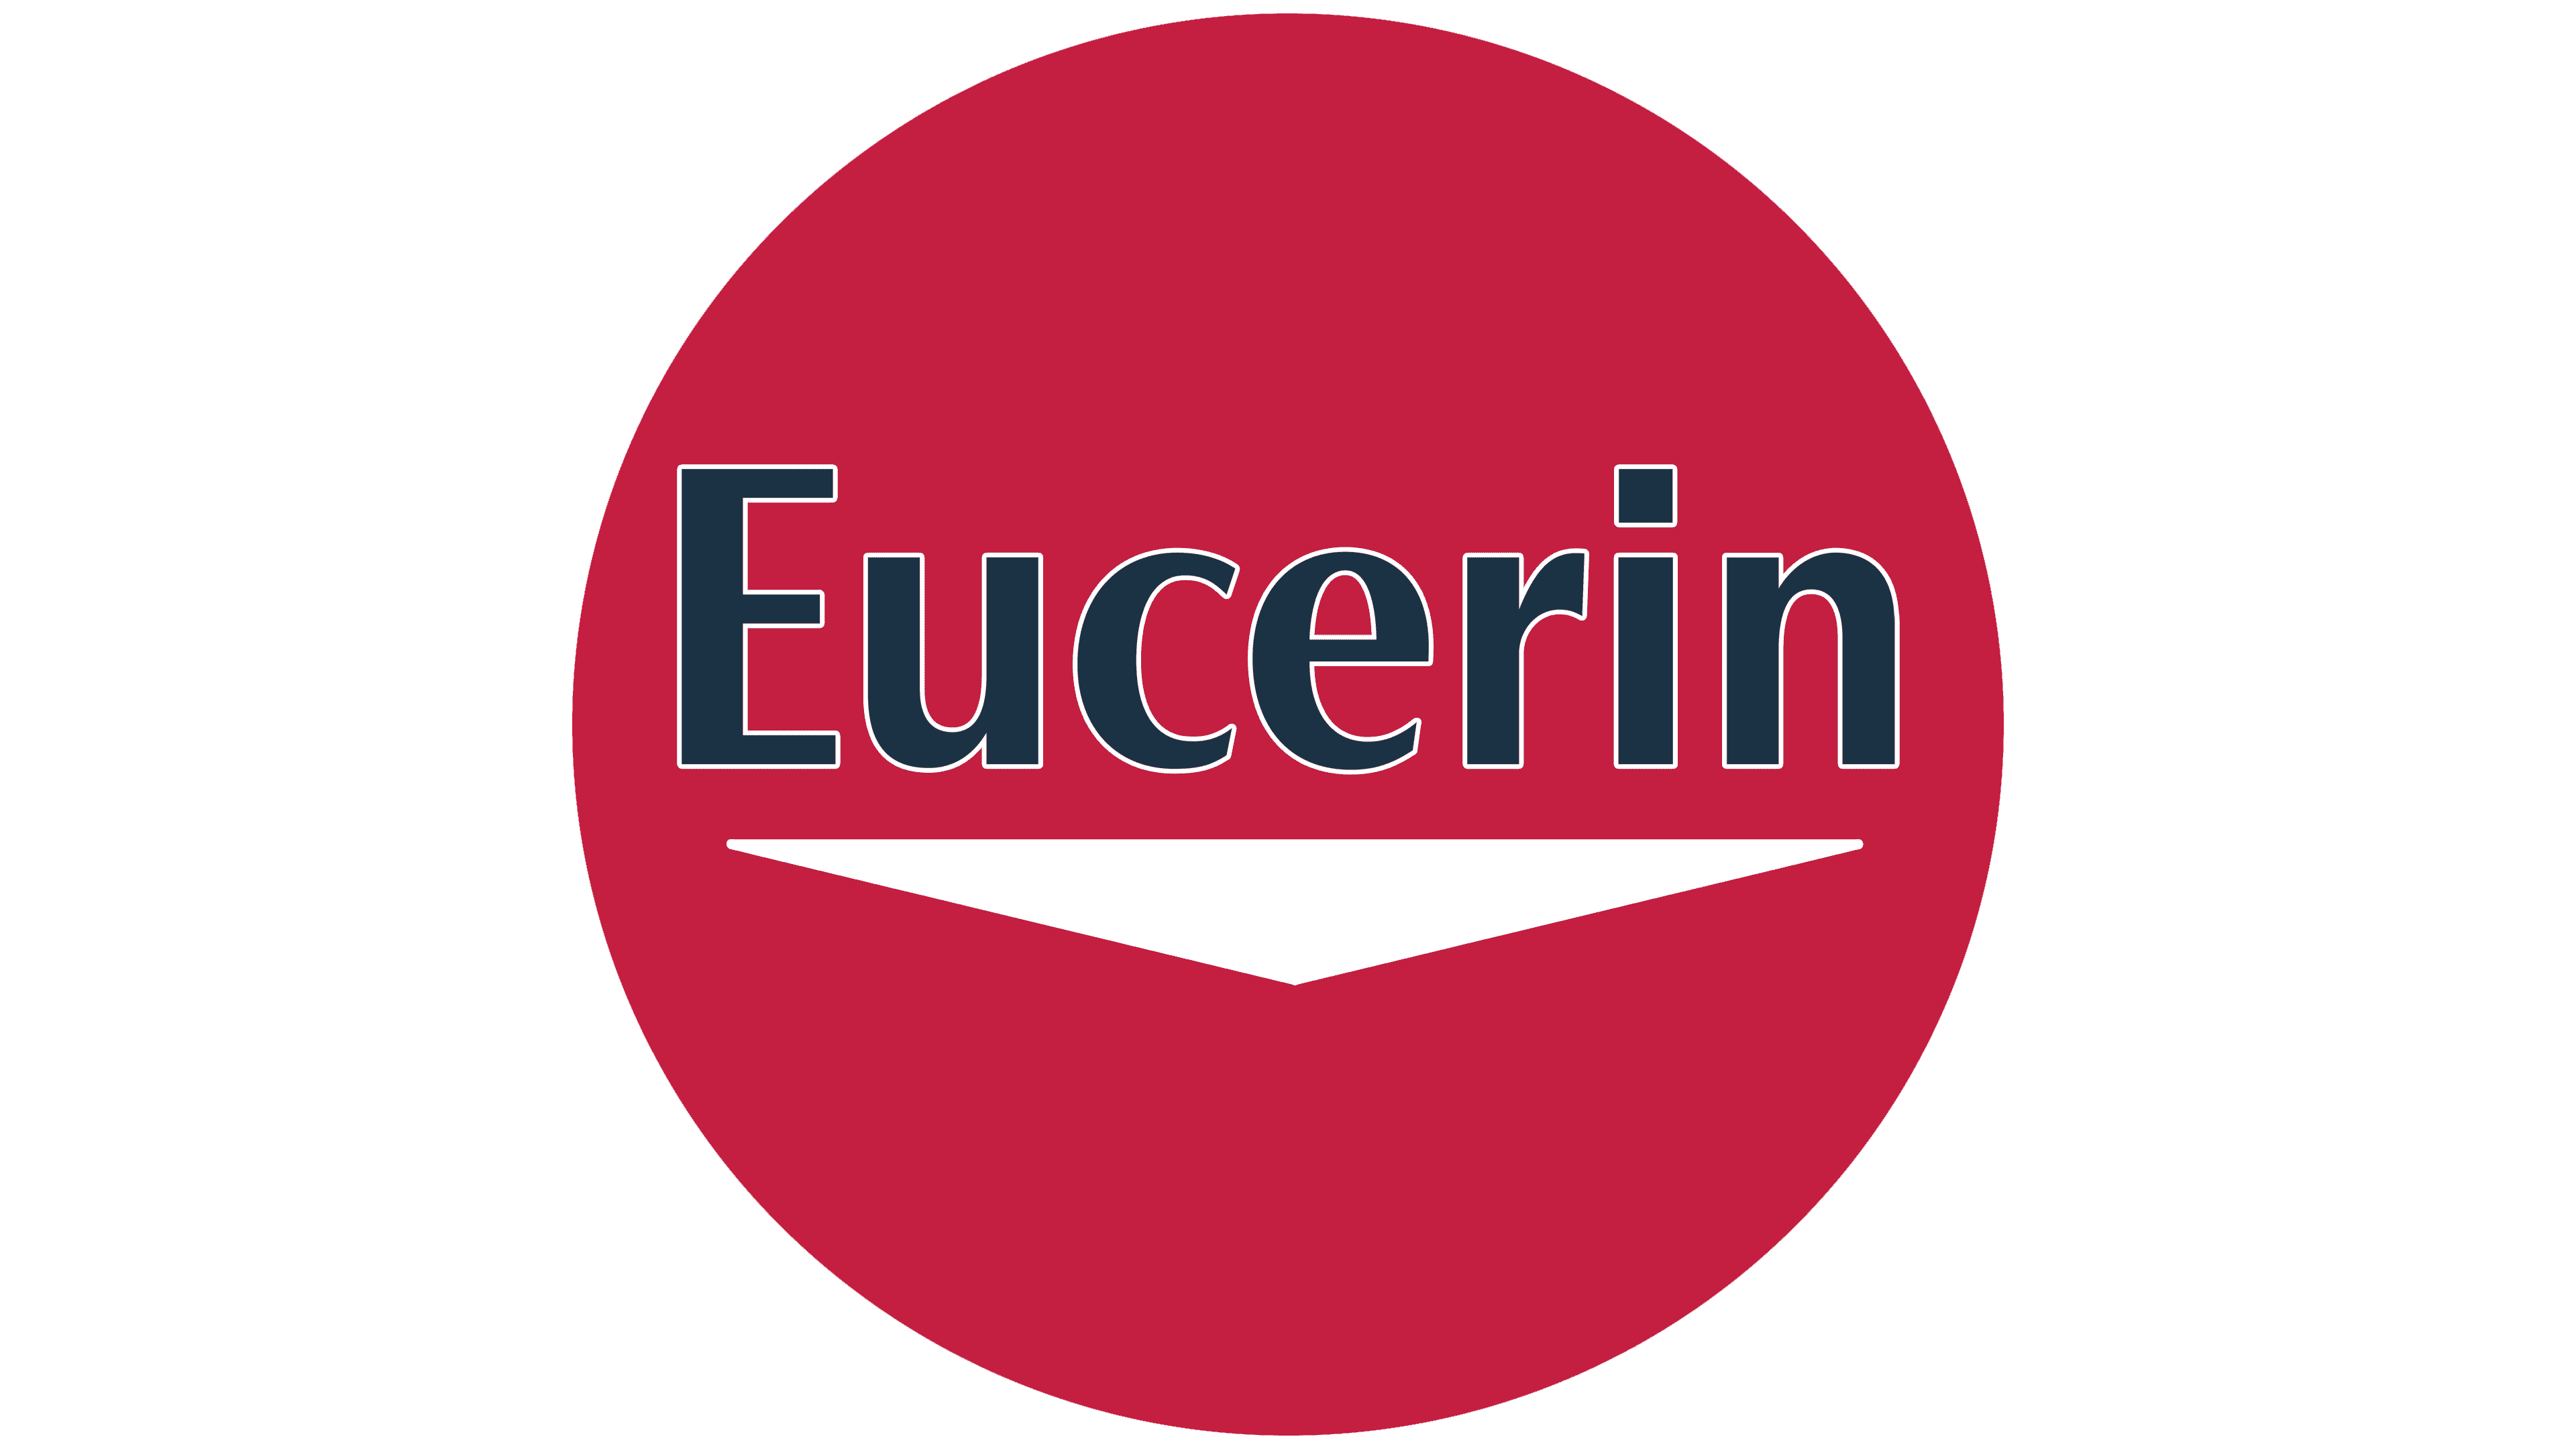 Eucerin Logo Dan Simbol Makna Sejarah Png Merek Images And Photos Finder